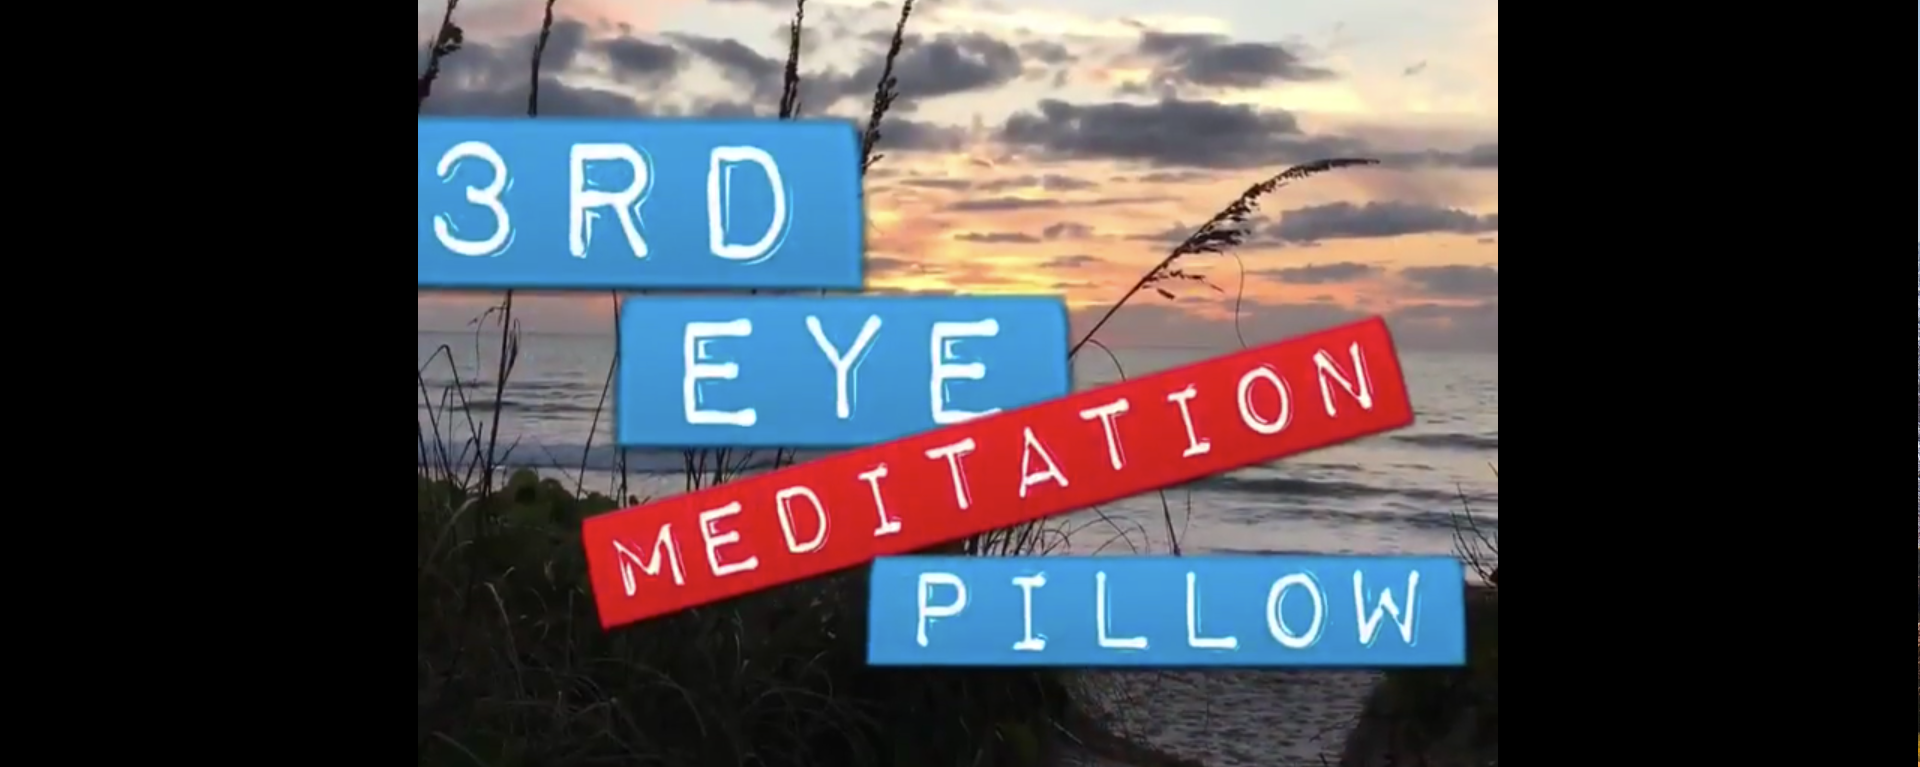 Third Eye Meditation Pillow